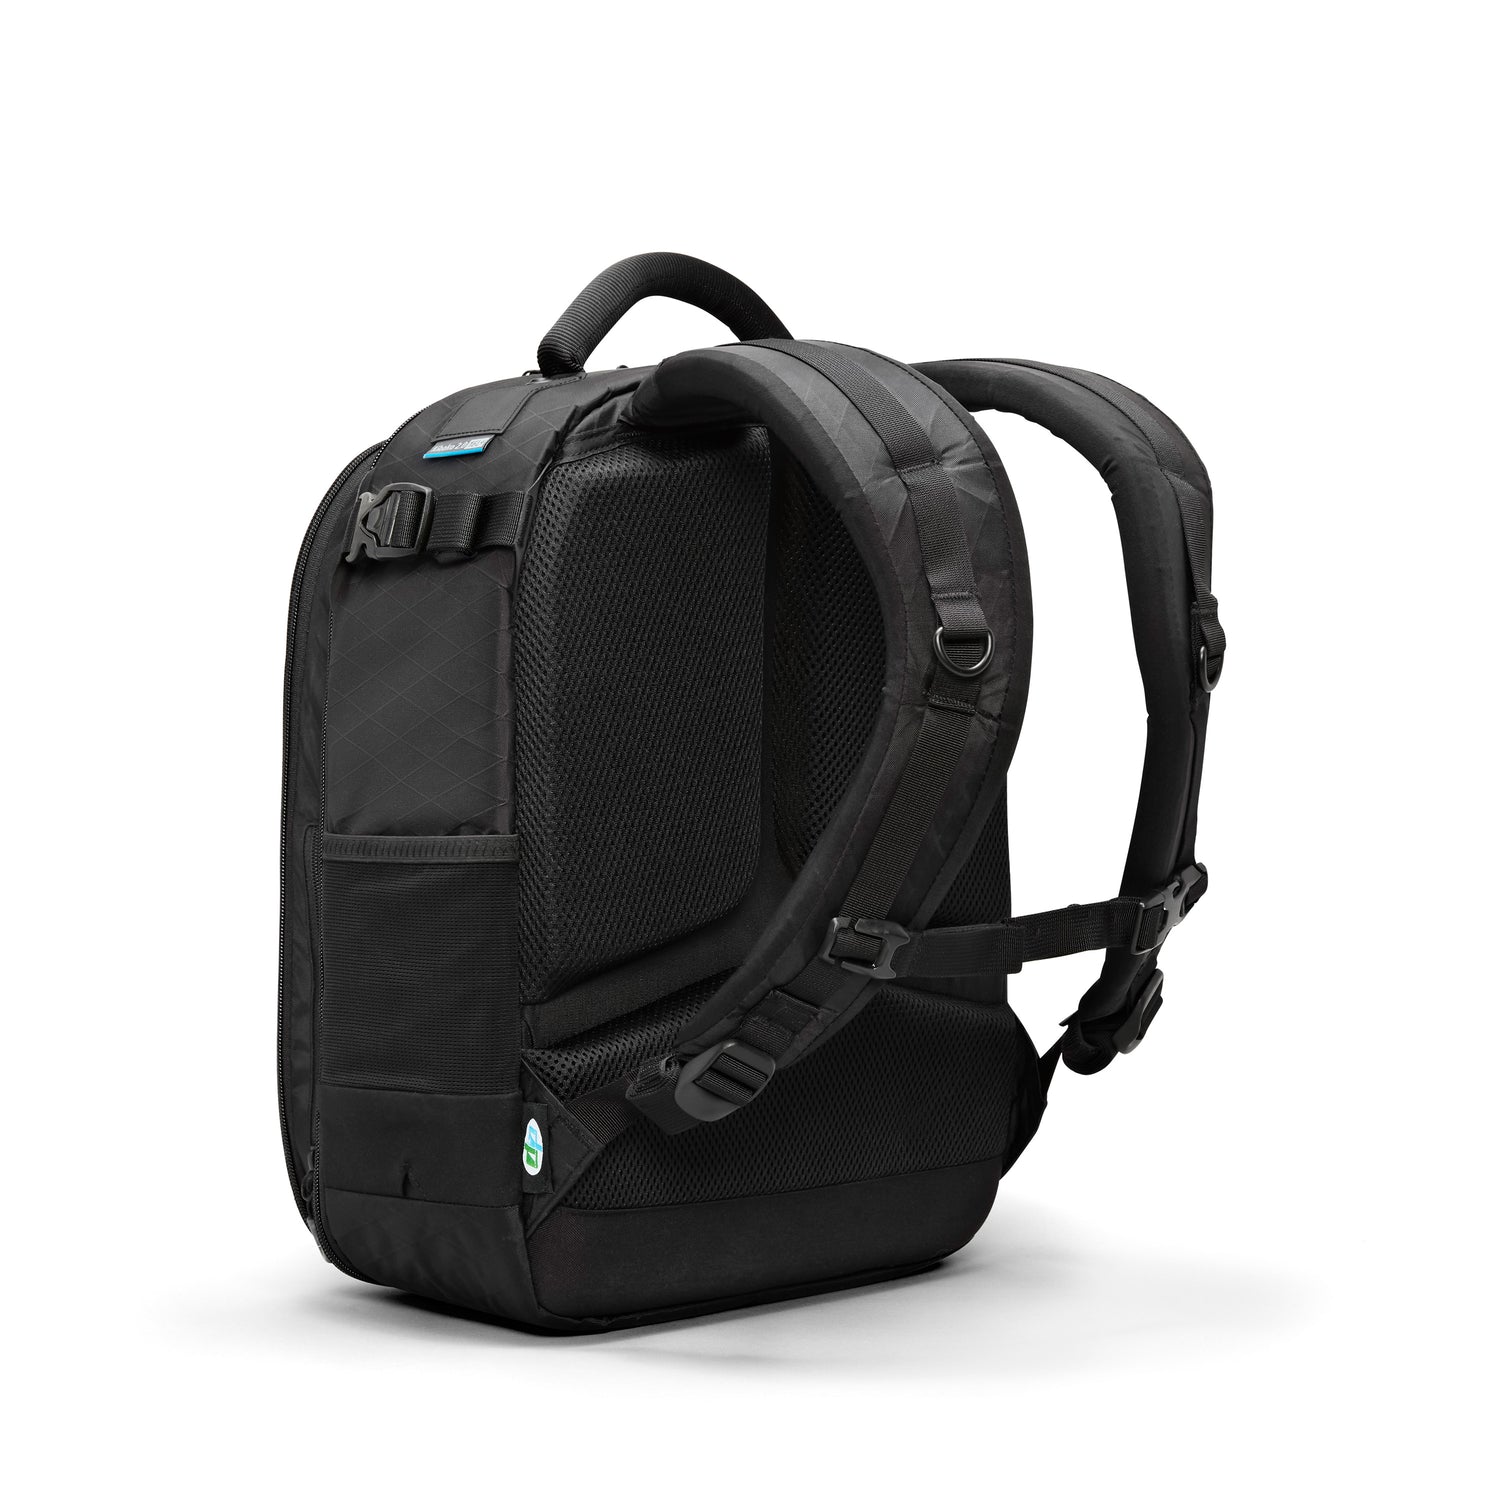 Kiboko 16L+ Camera Backpack